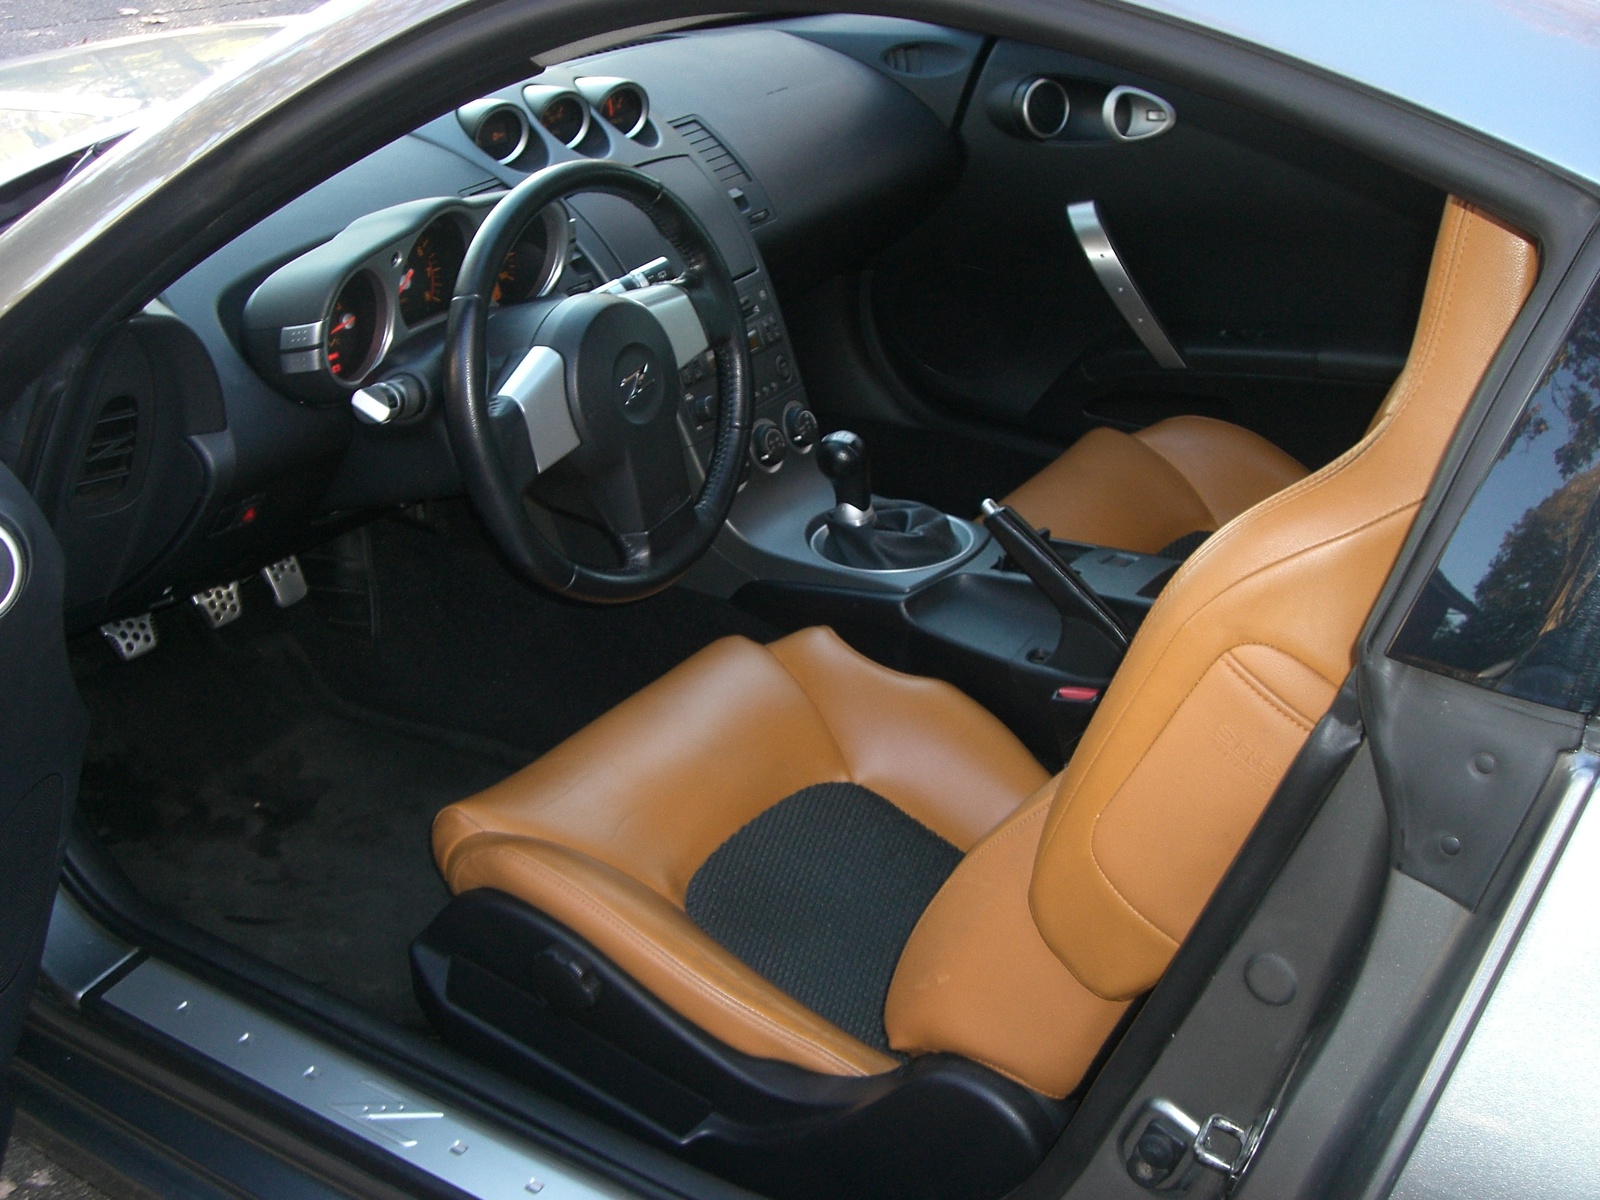 2003 Nissan 350z interior pictures